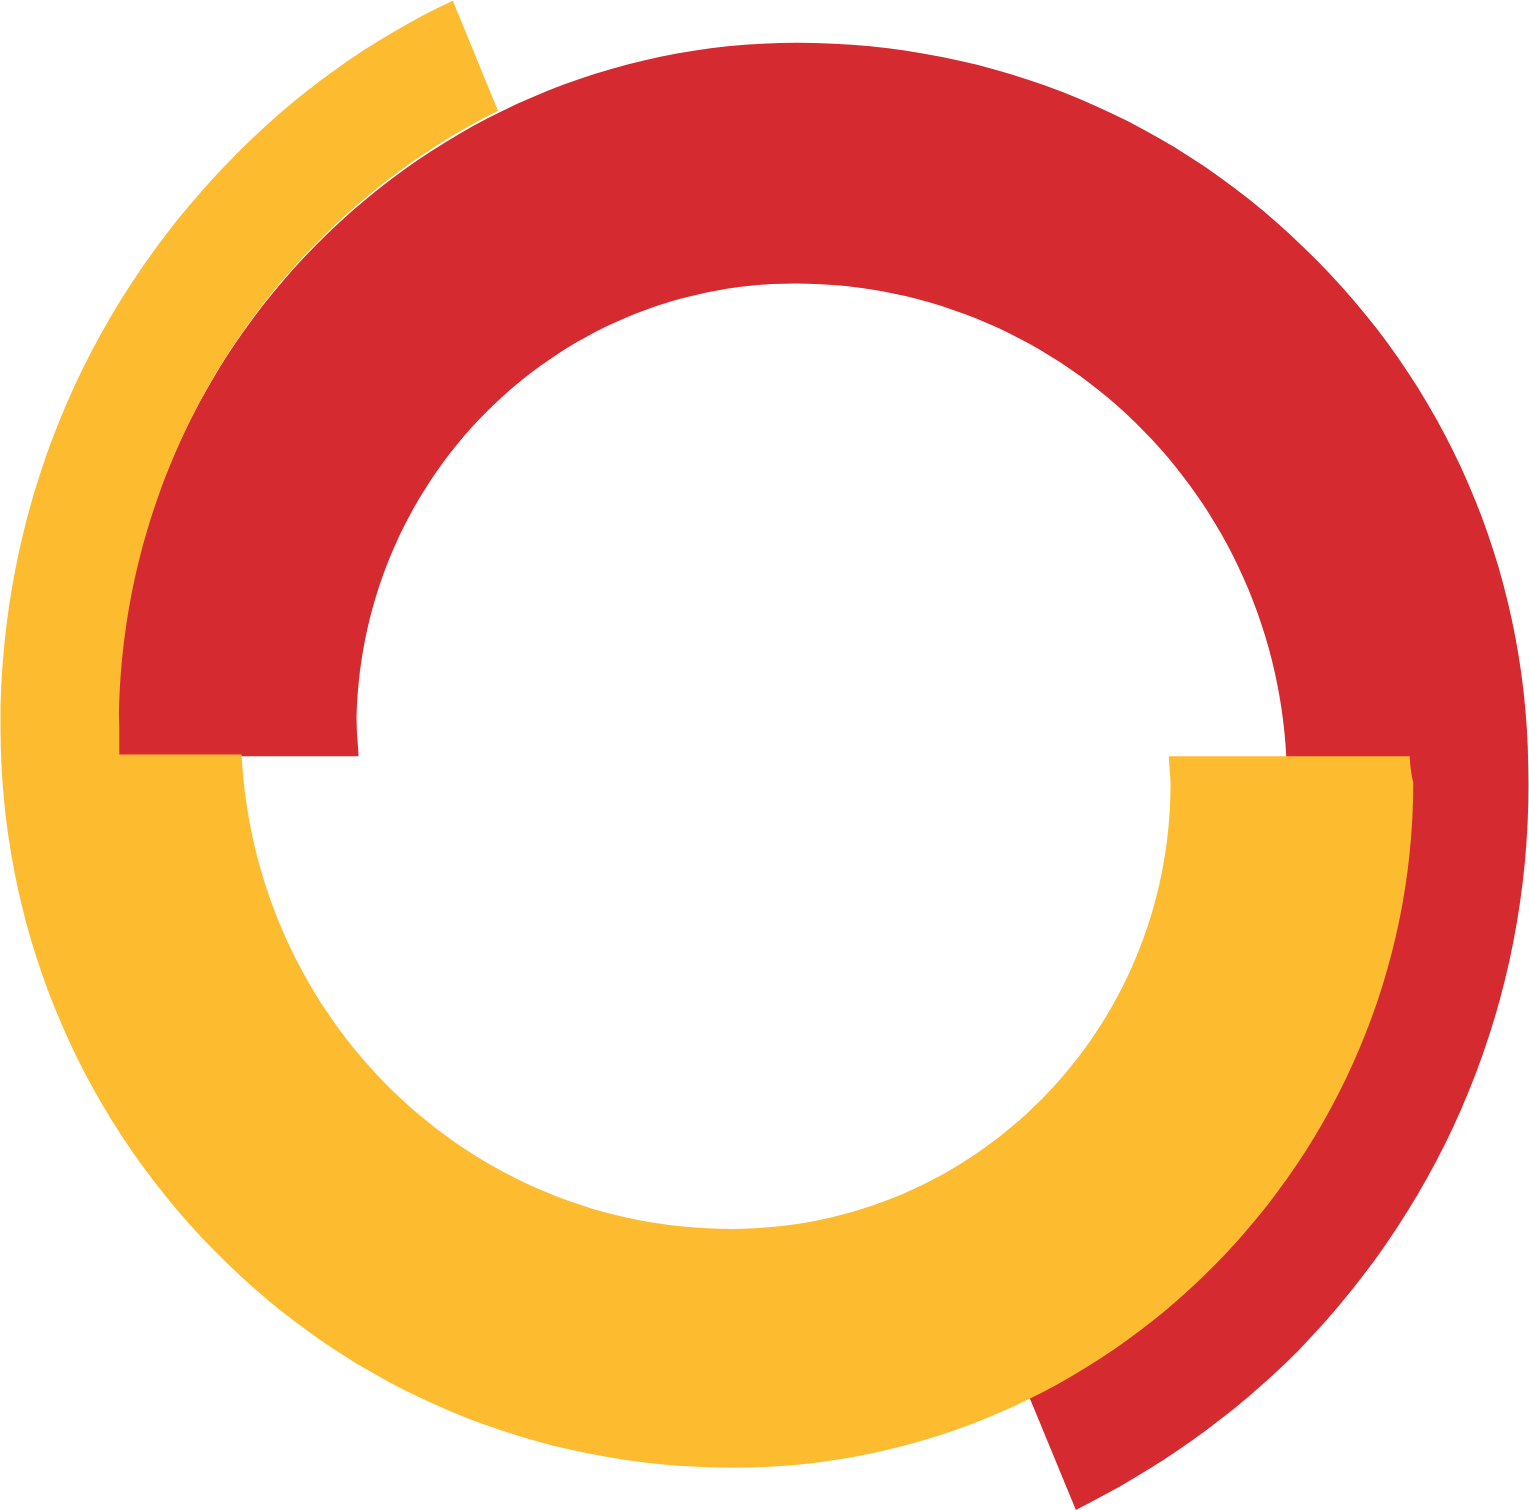 Circle logo. Circle логотип. Rounds лого. Round logo. Логотип k Round.